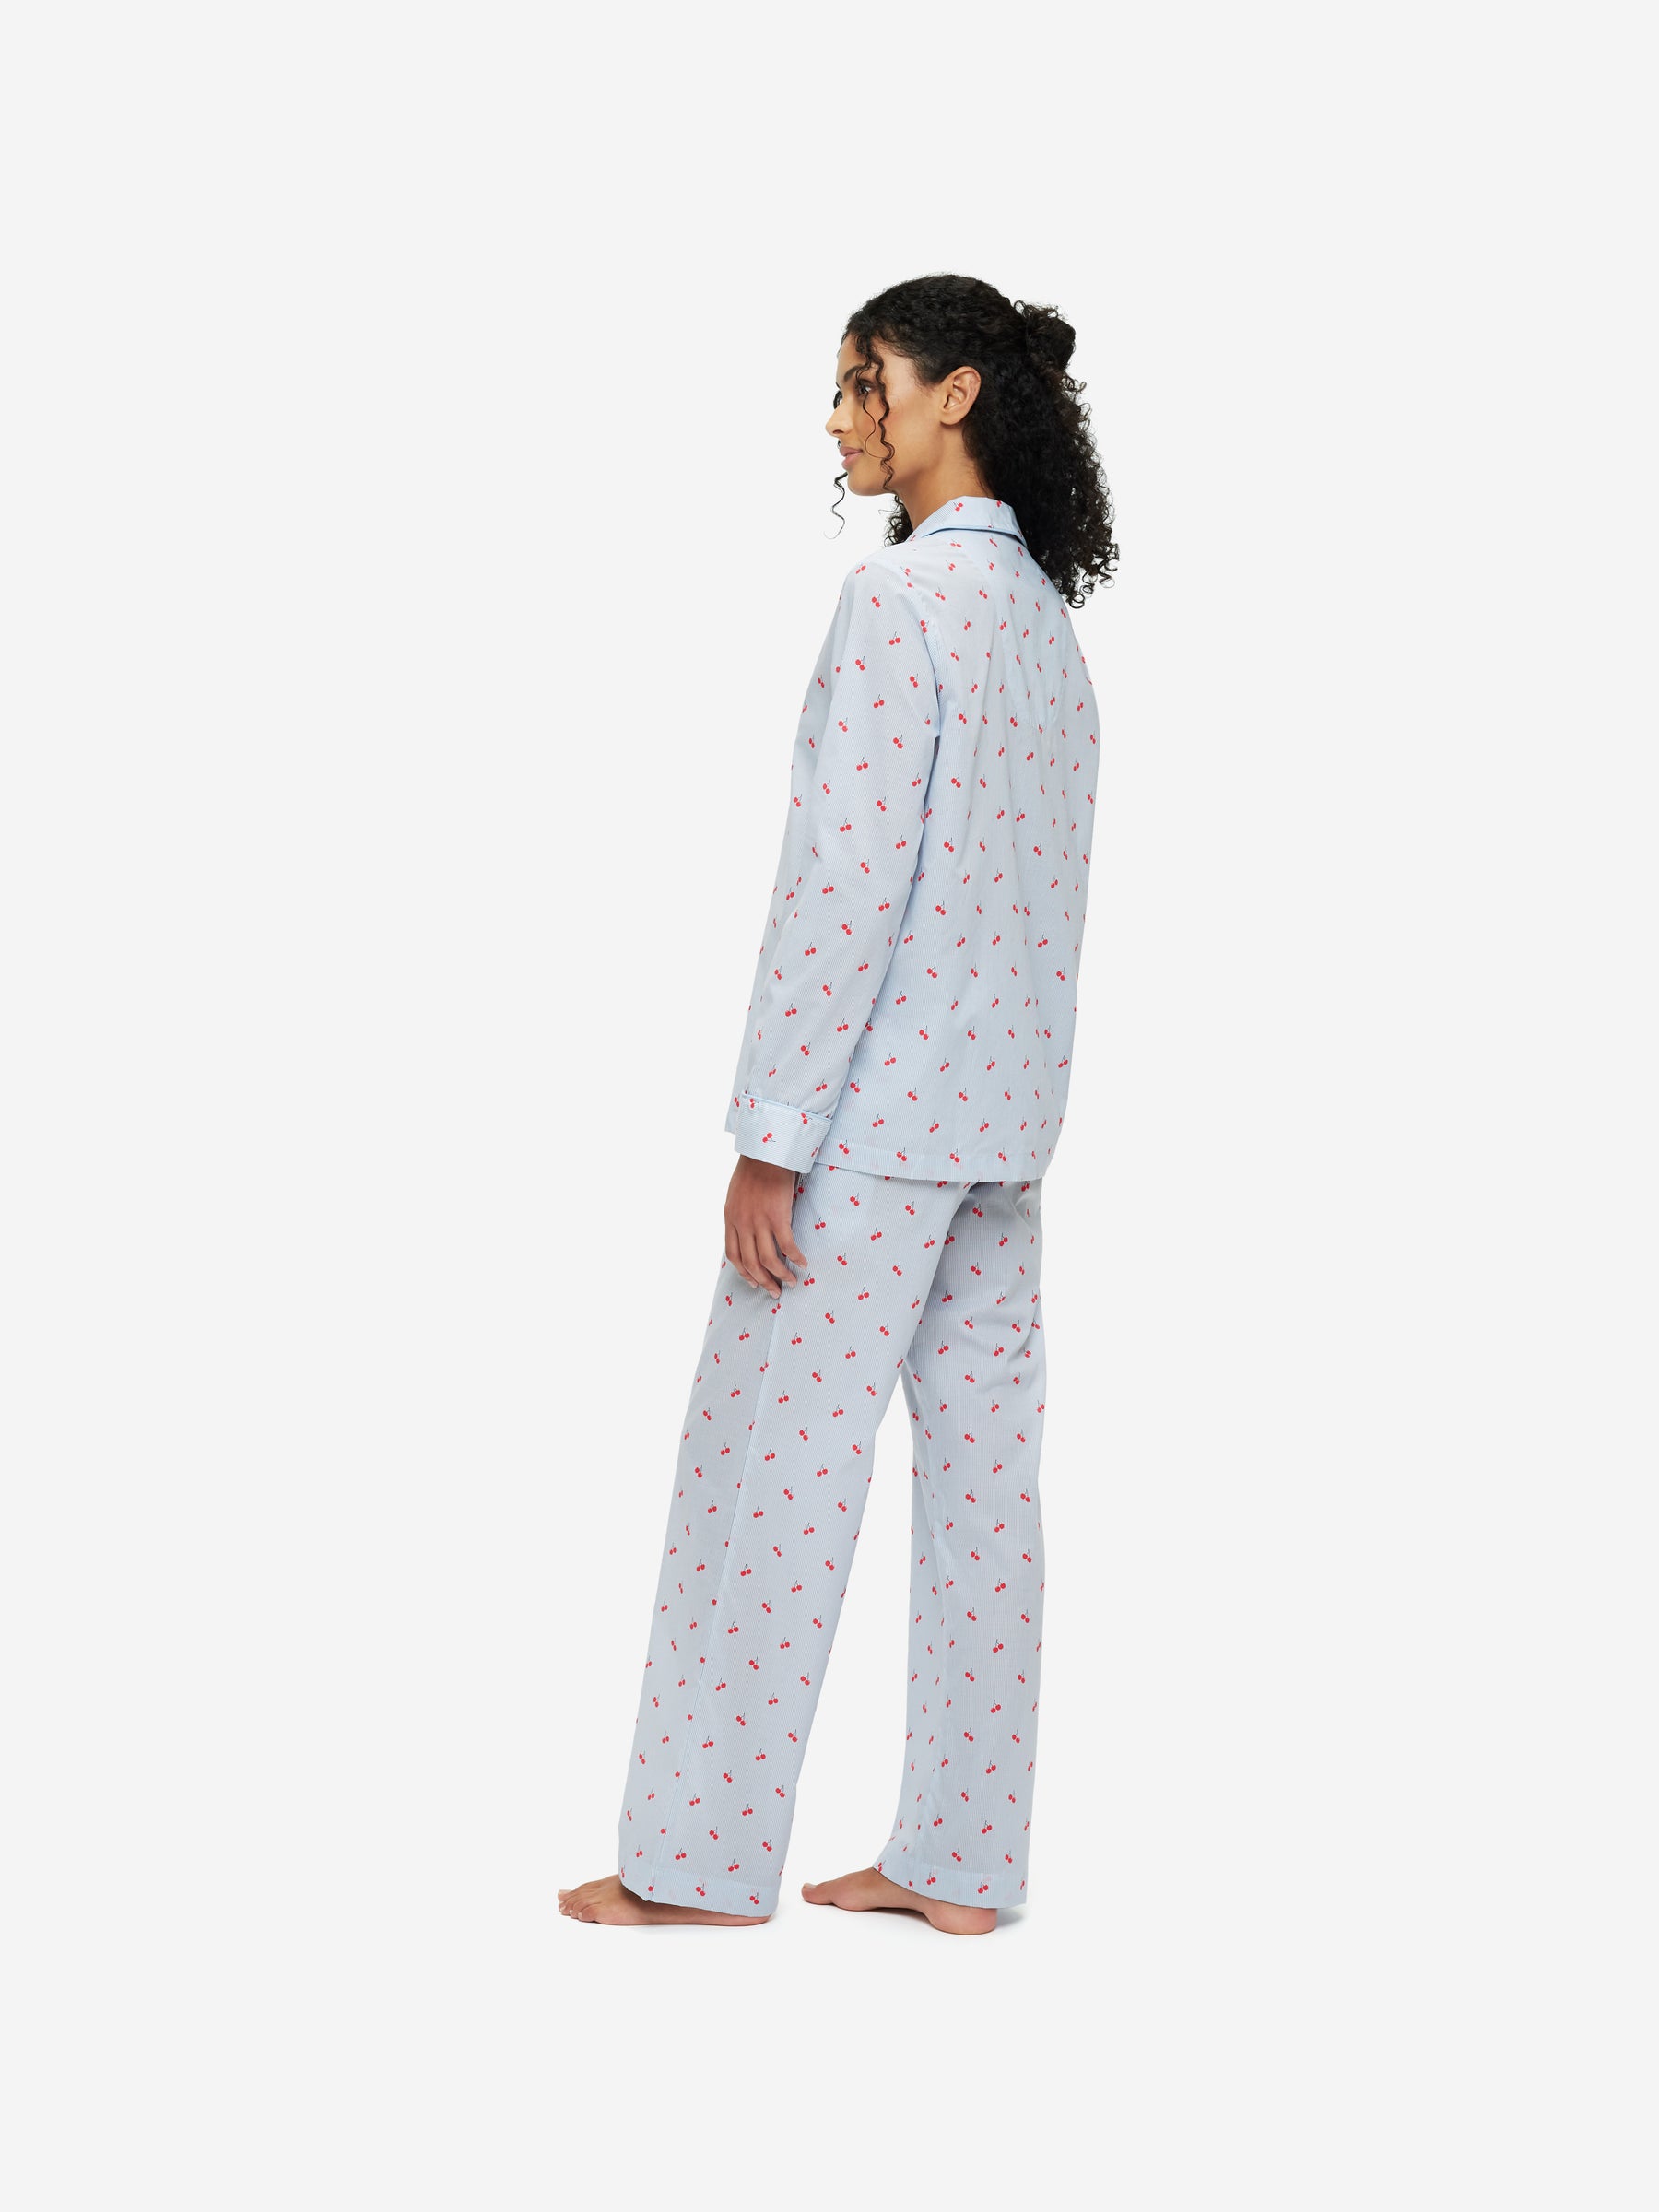 Women's Pyjamas Nelson 84 Cotton Batiste Blue